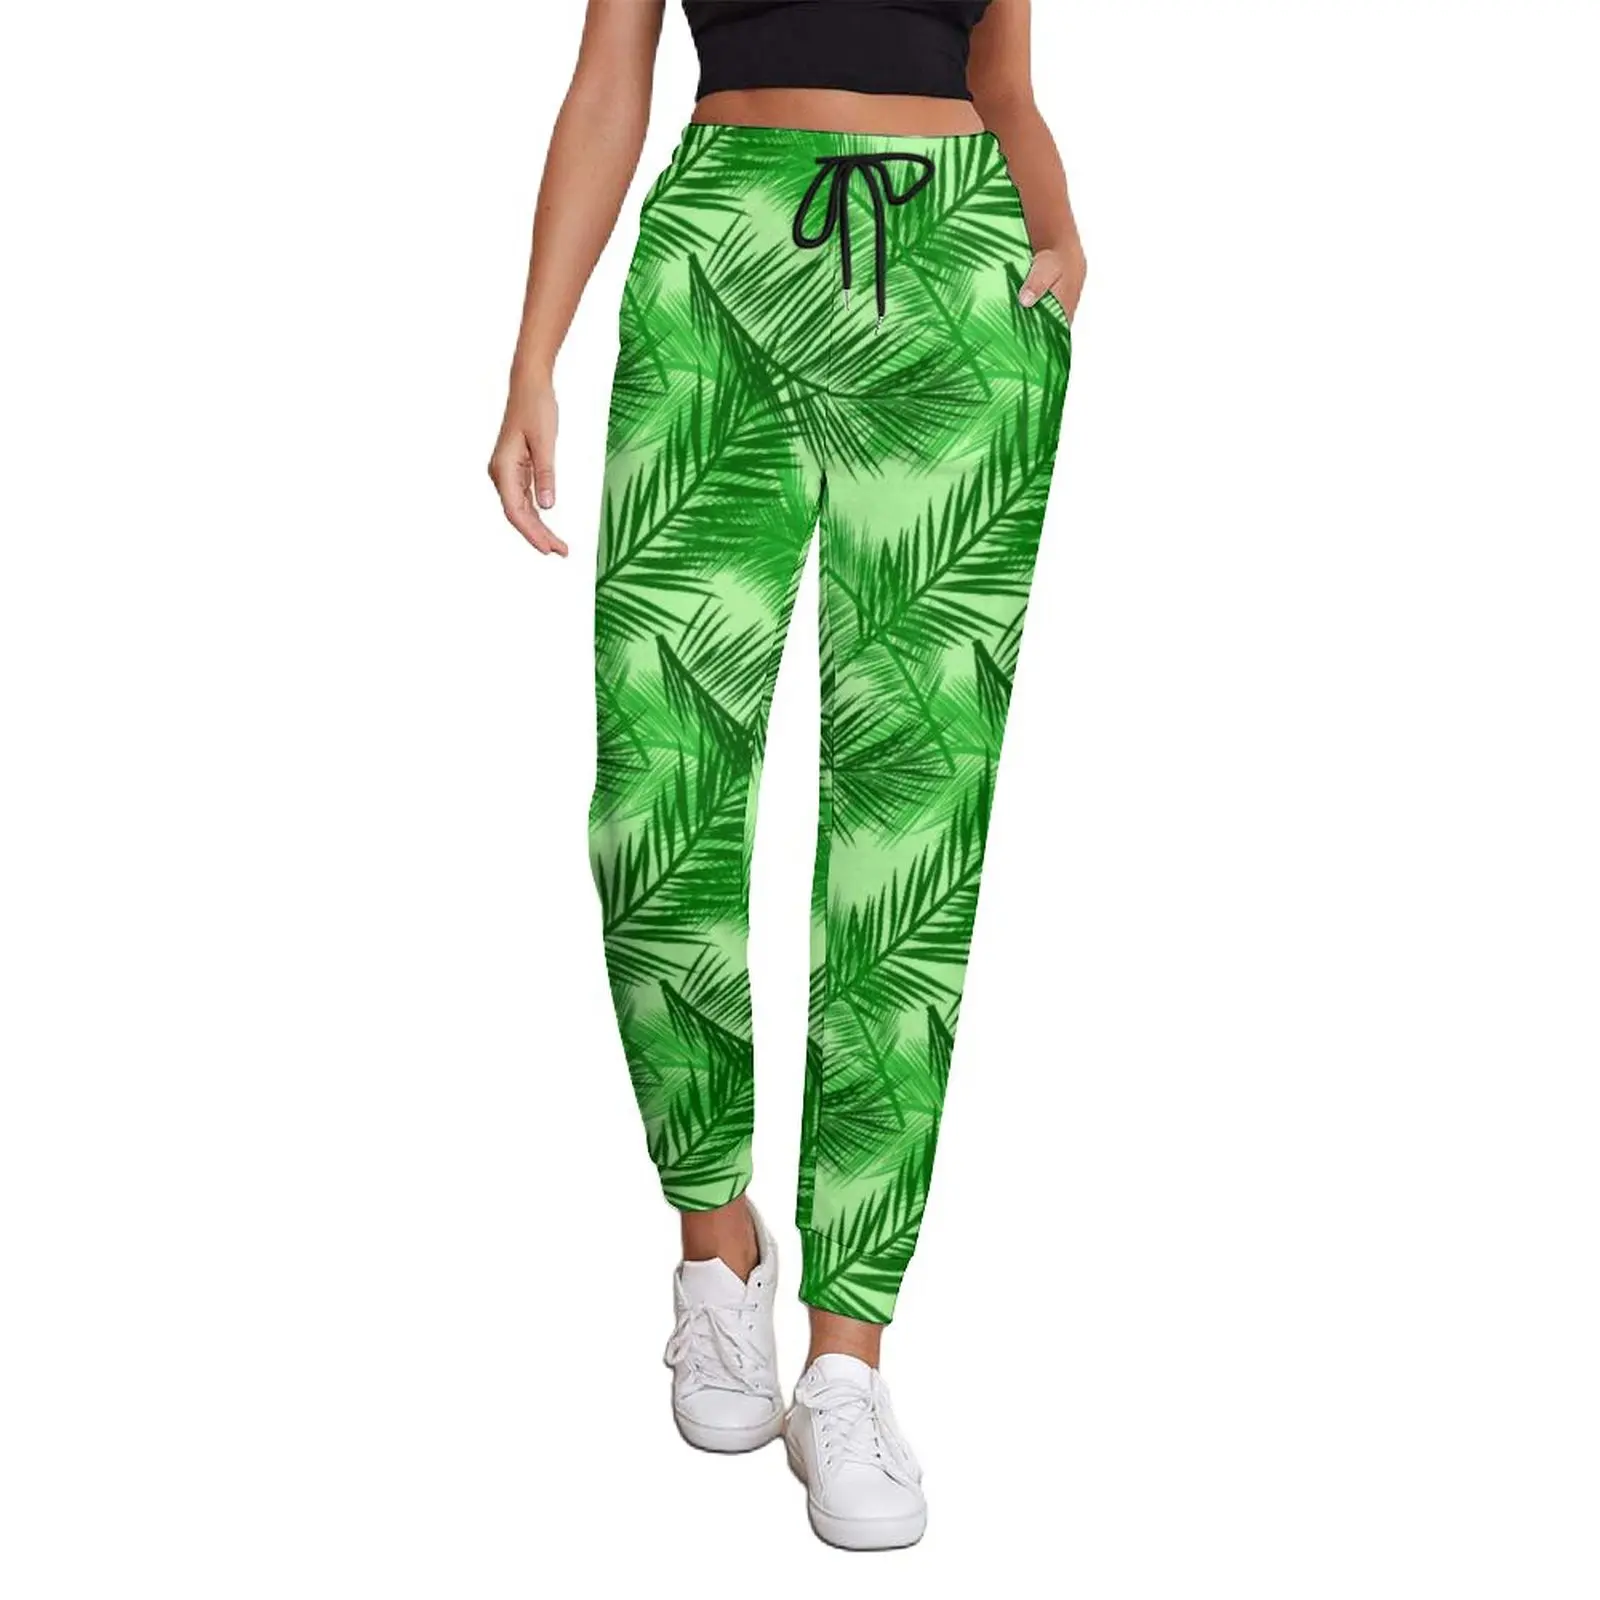 

Palm Leaf Print Jogger Pants Tropical Leaves Casual Sweatpants Autumn Graphic Street Fashion Big Size Trousers Gift Idea